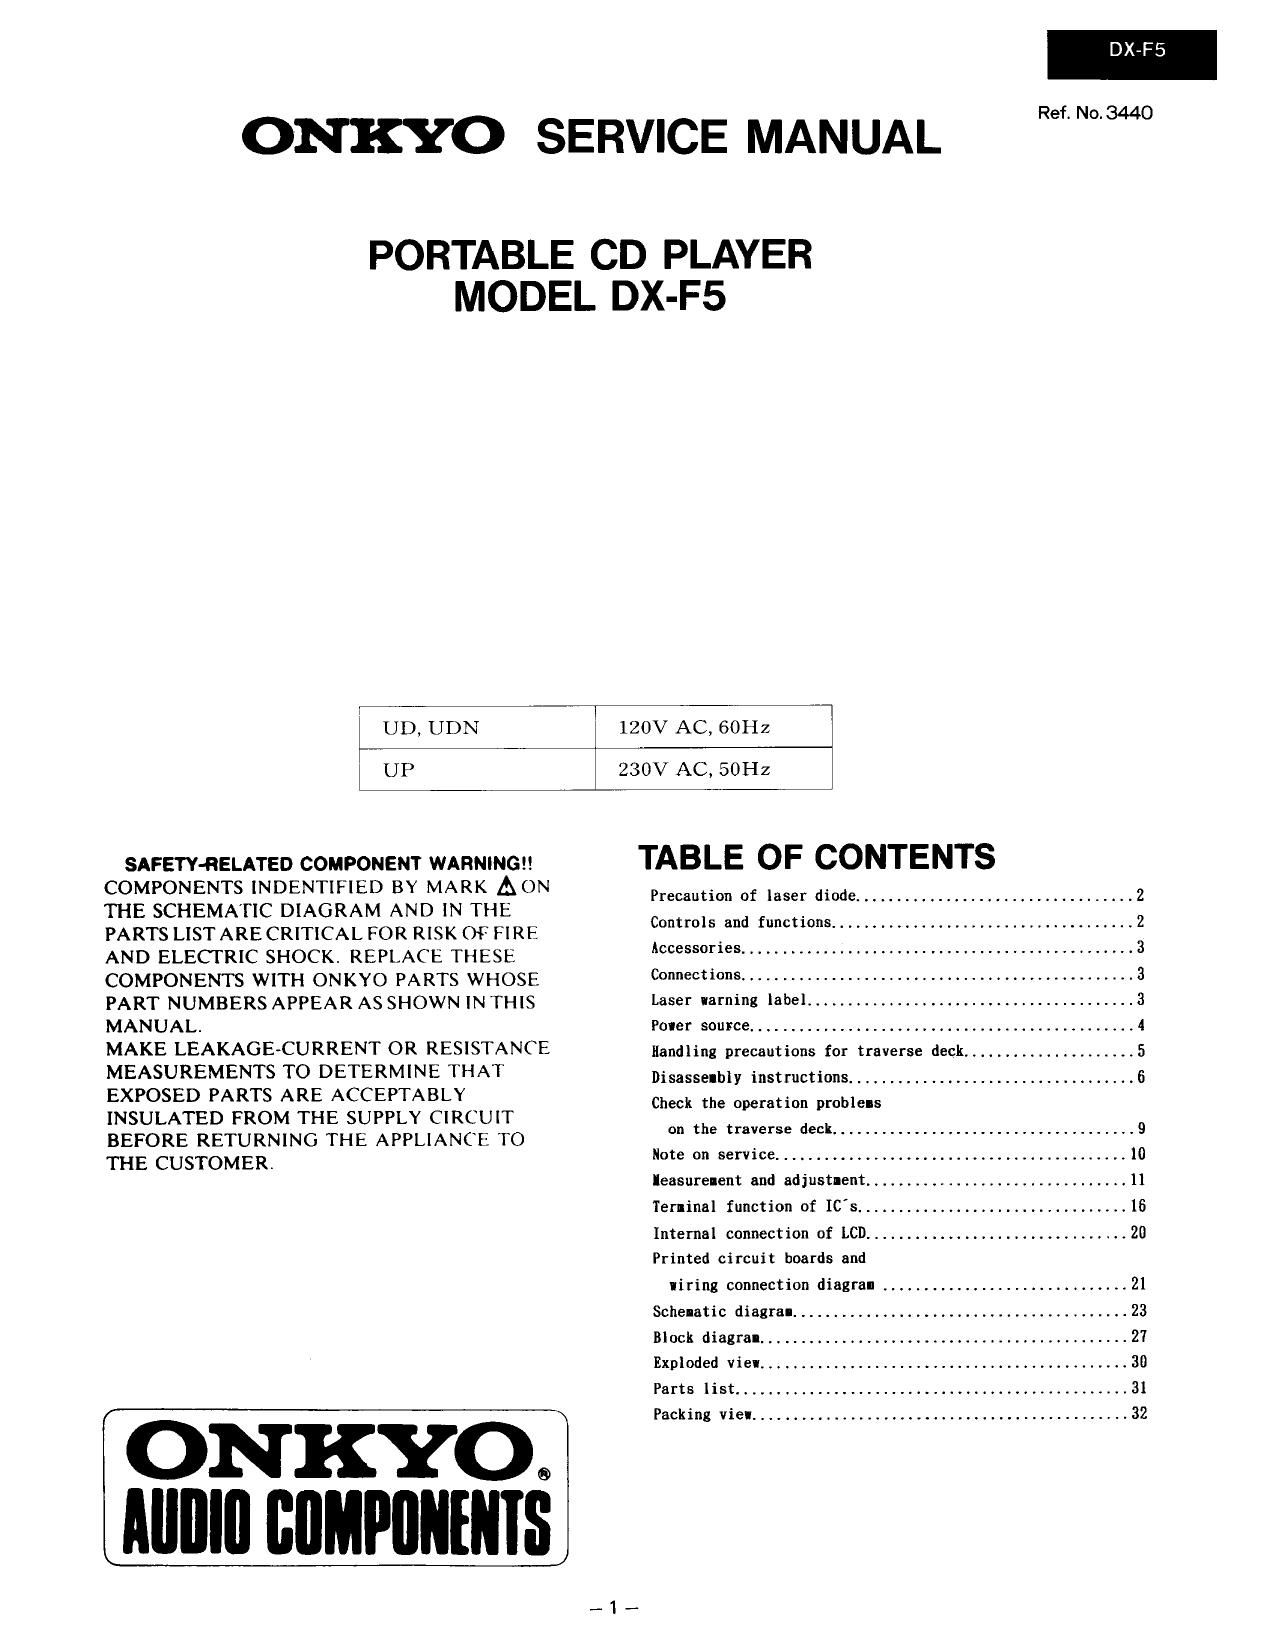 Onkyo DXF 5 Service Manual